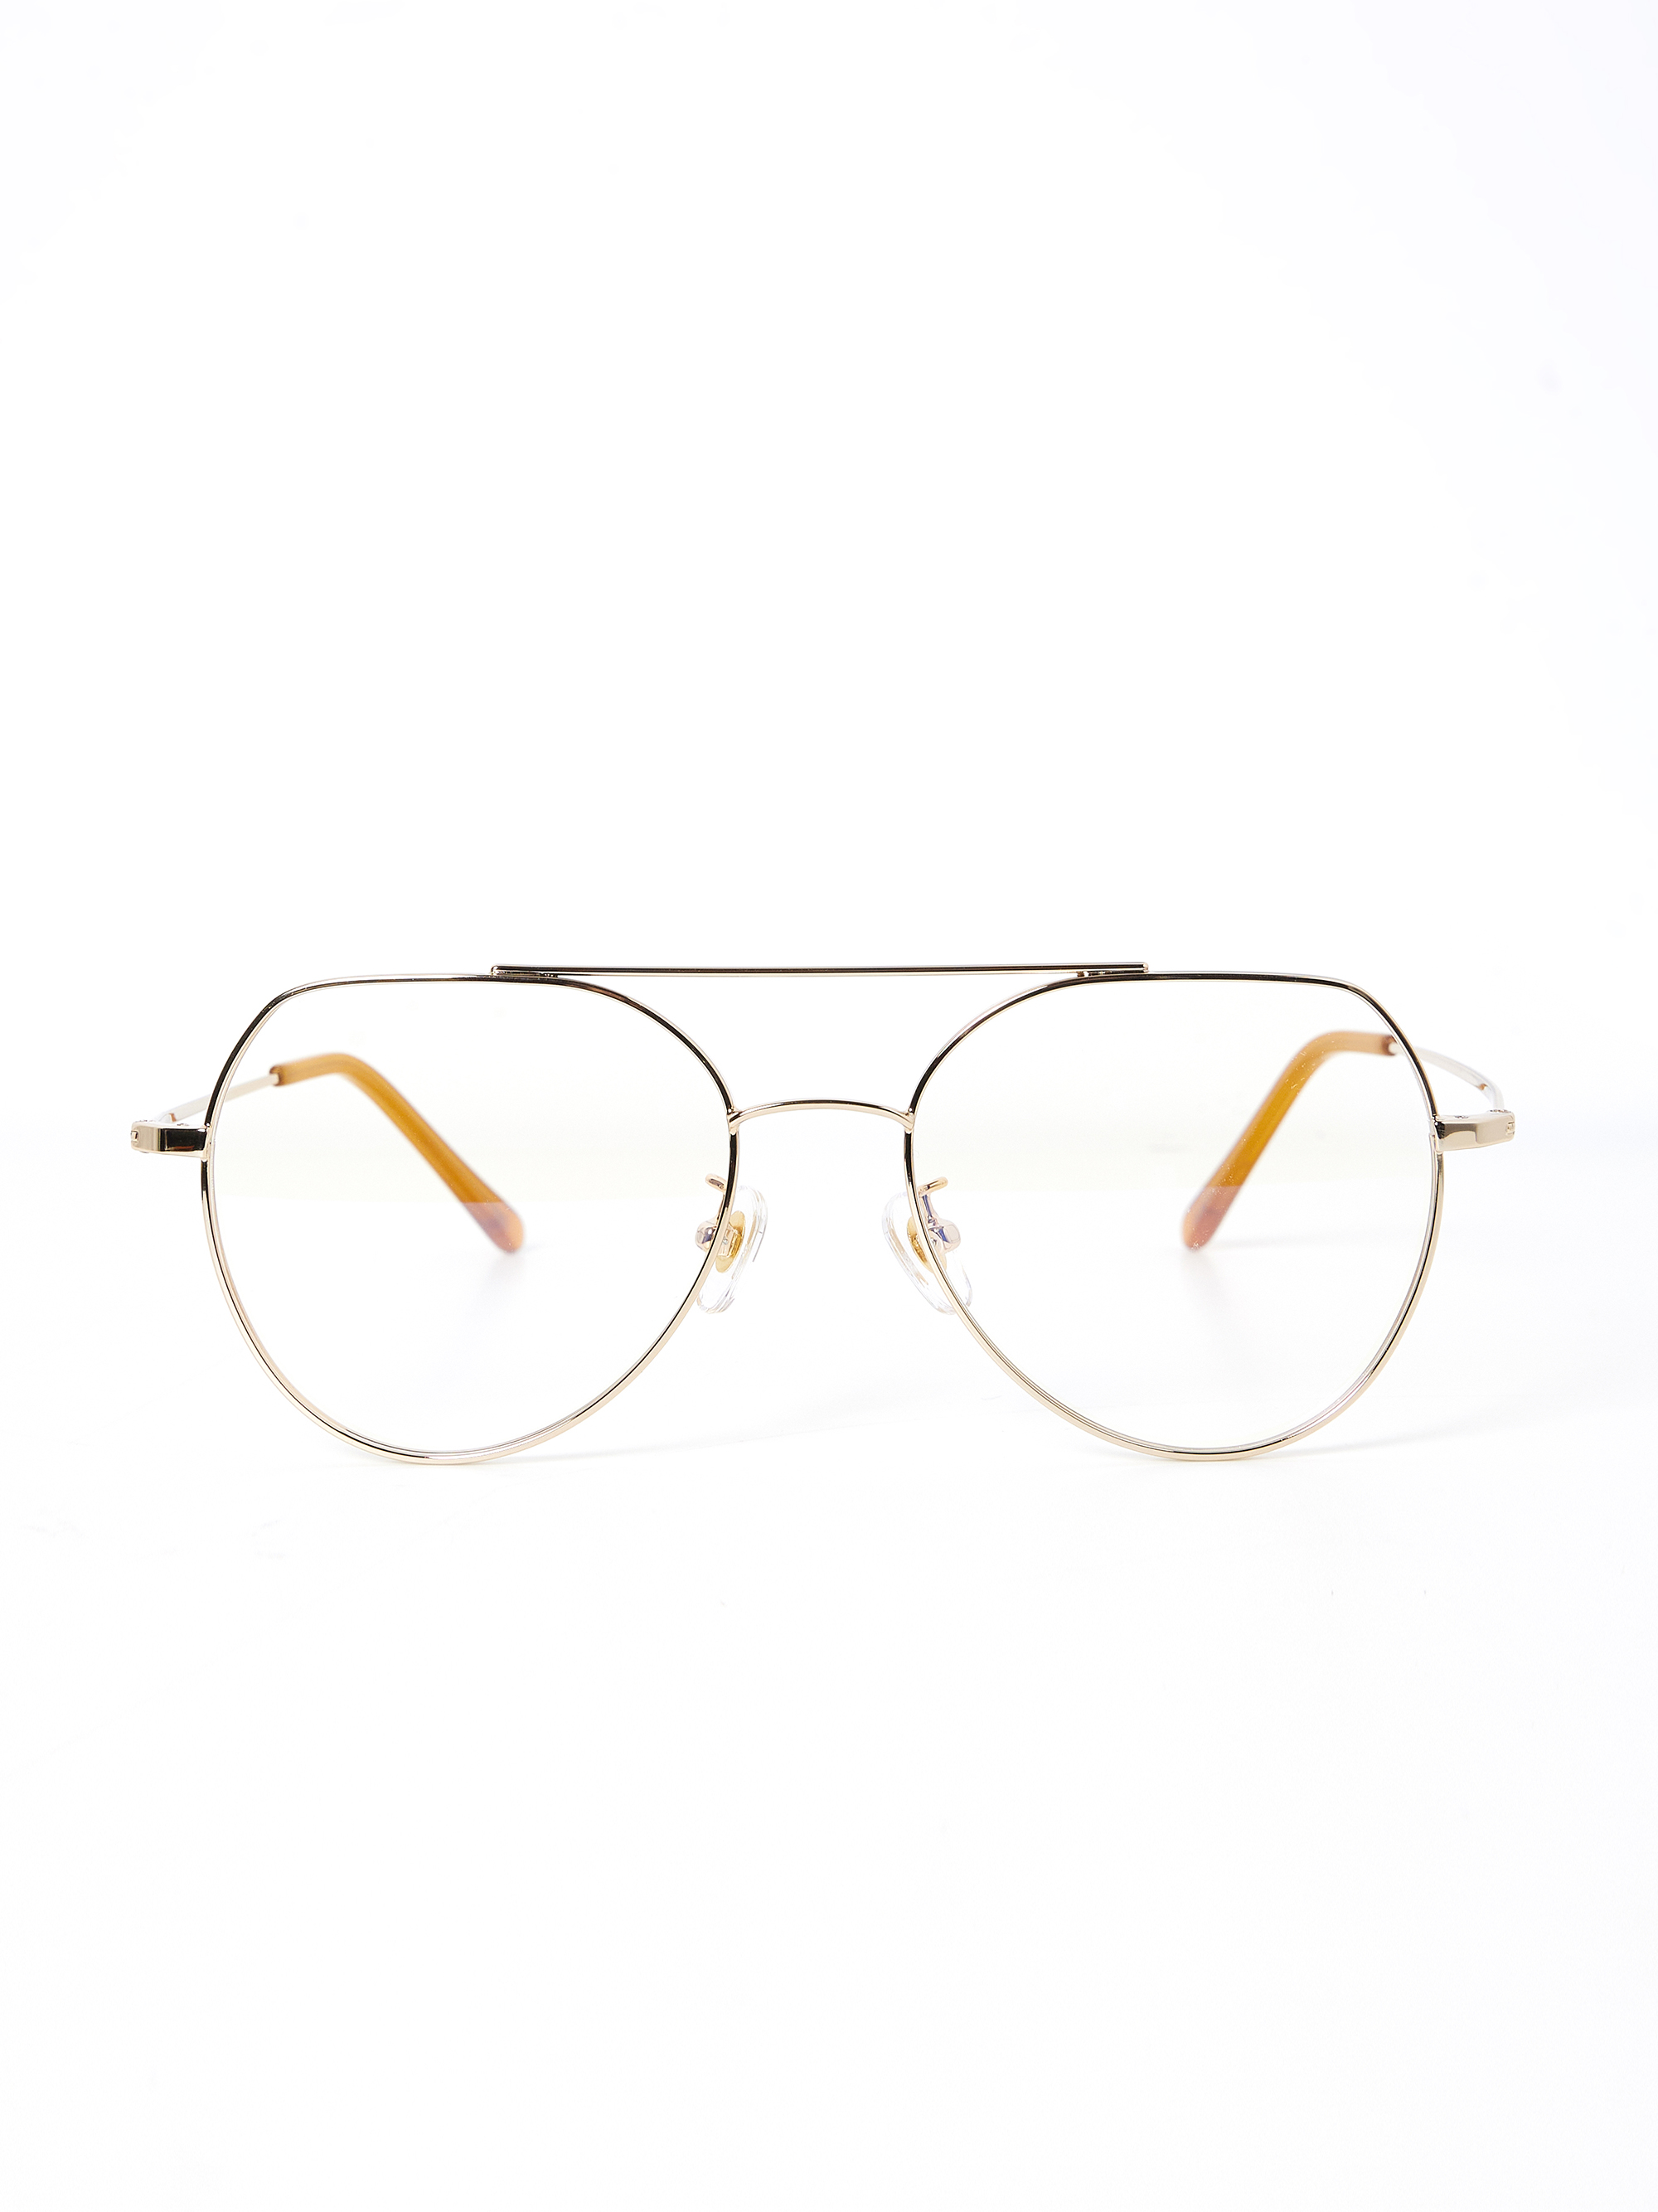 Otral Gold Frame Glasses / 오트랄 골드 프레임 안경